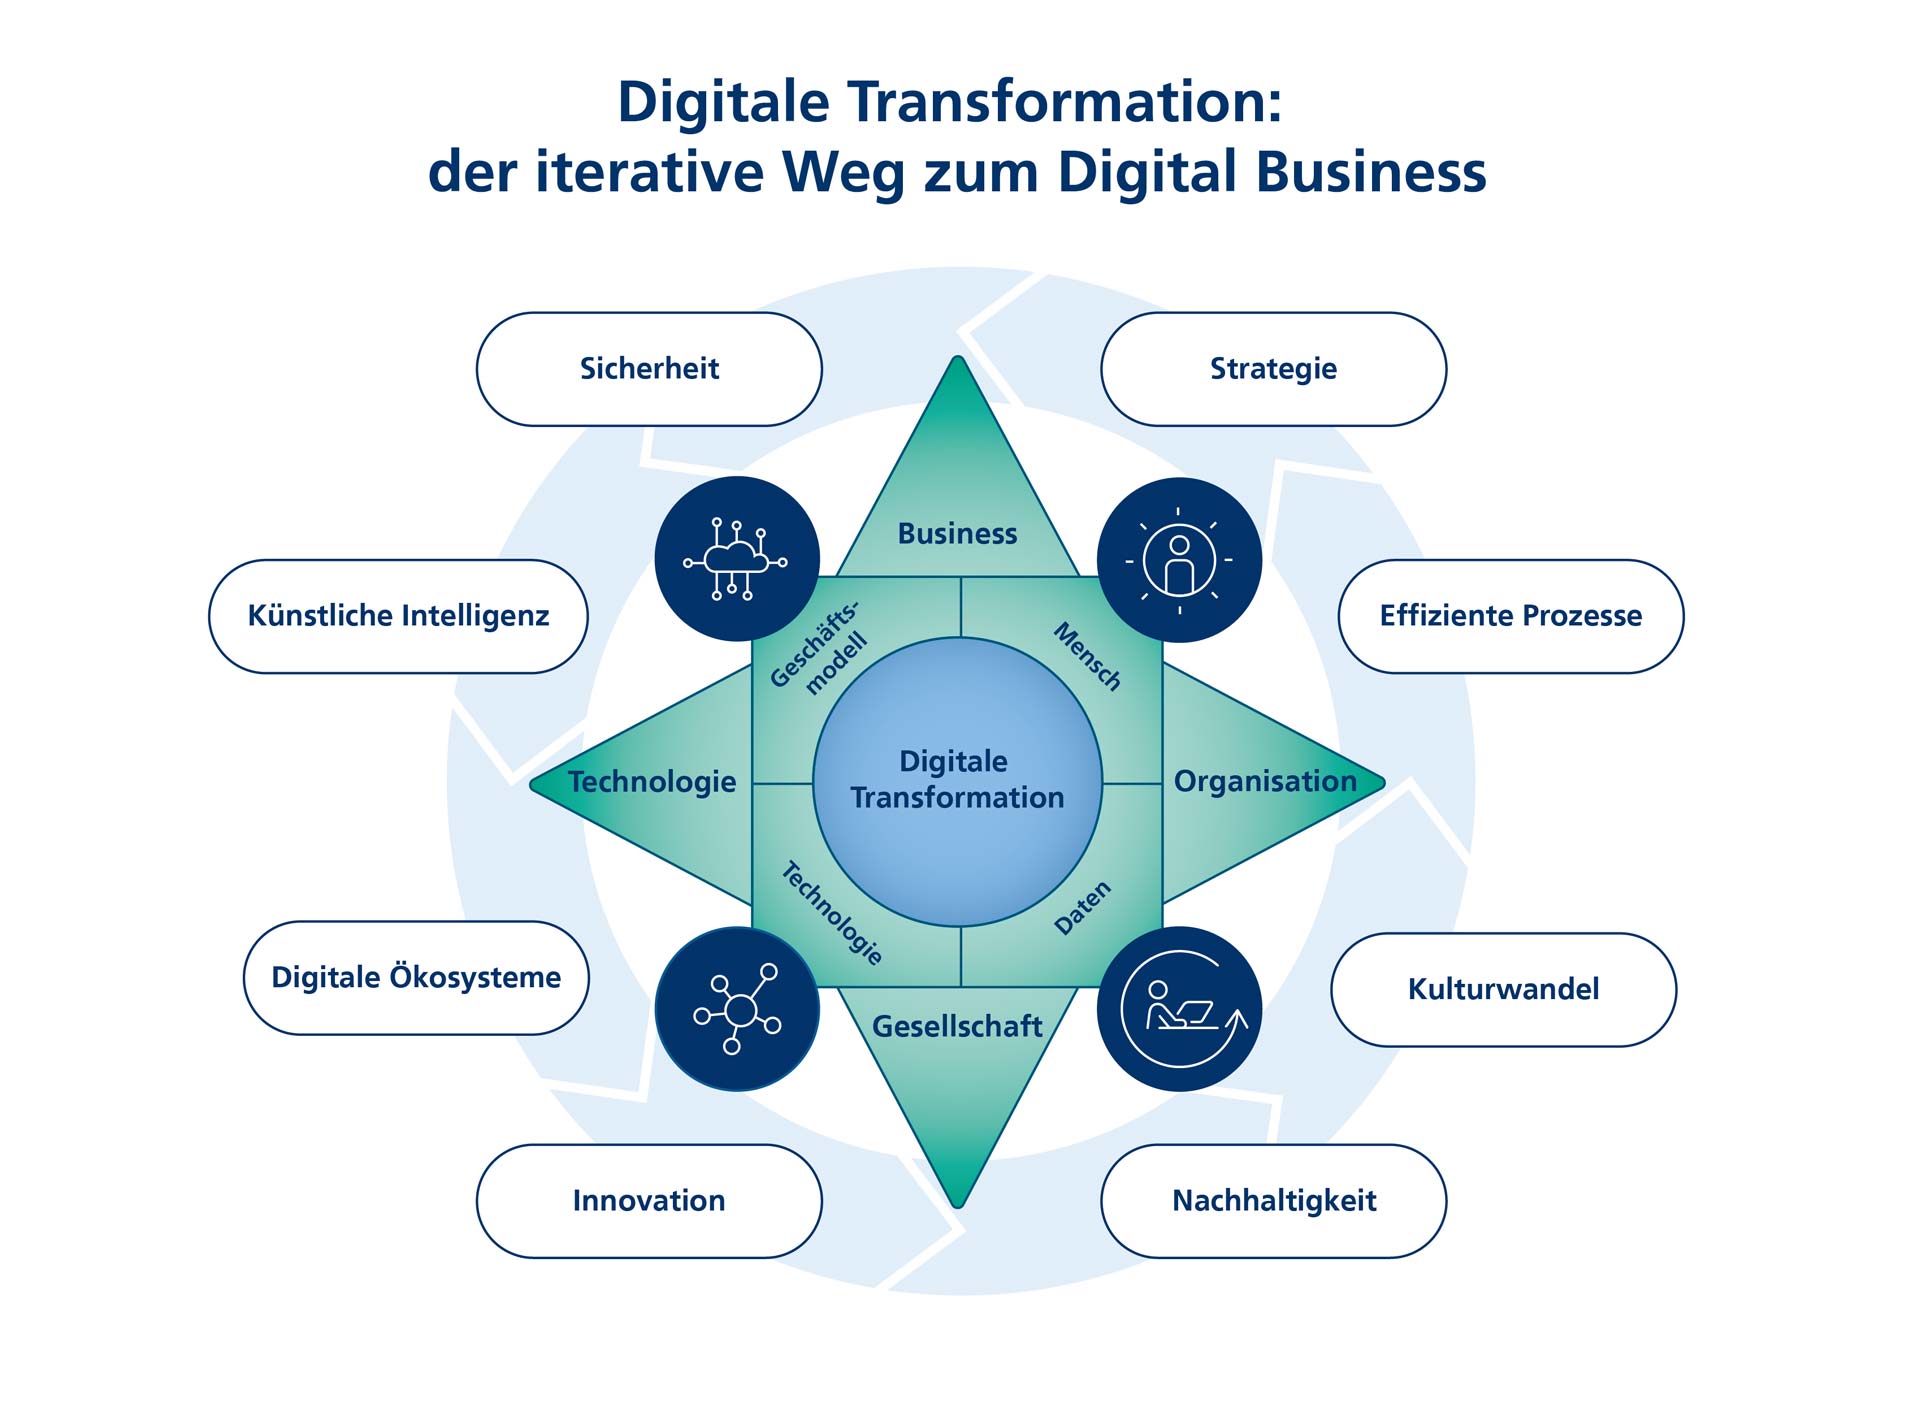 digitale transformation, digitalisierung, digital business, digitales geschäftsmodell